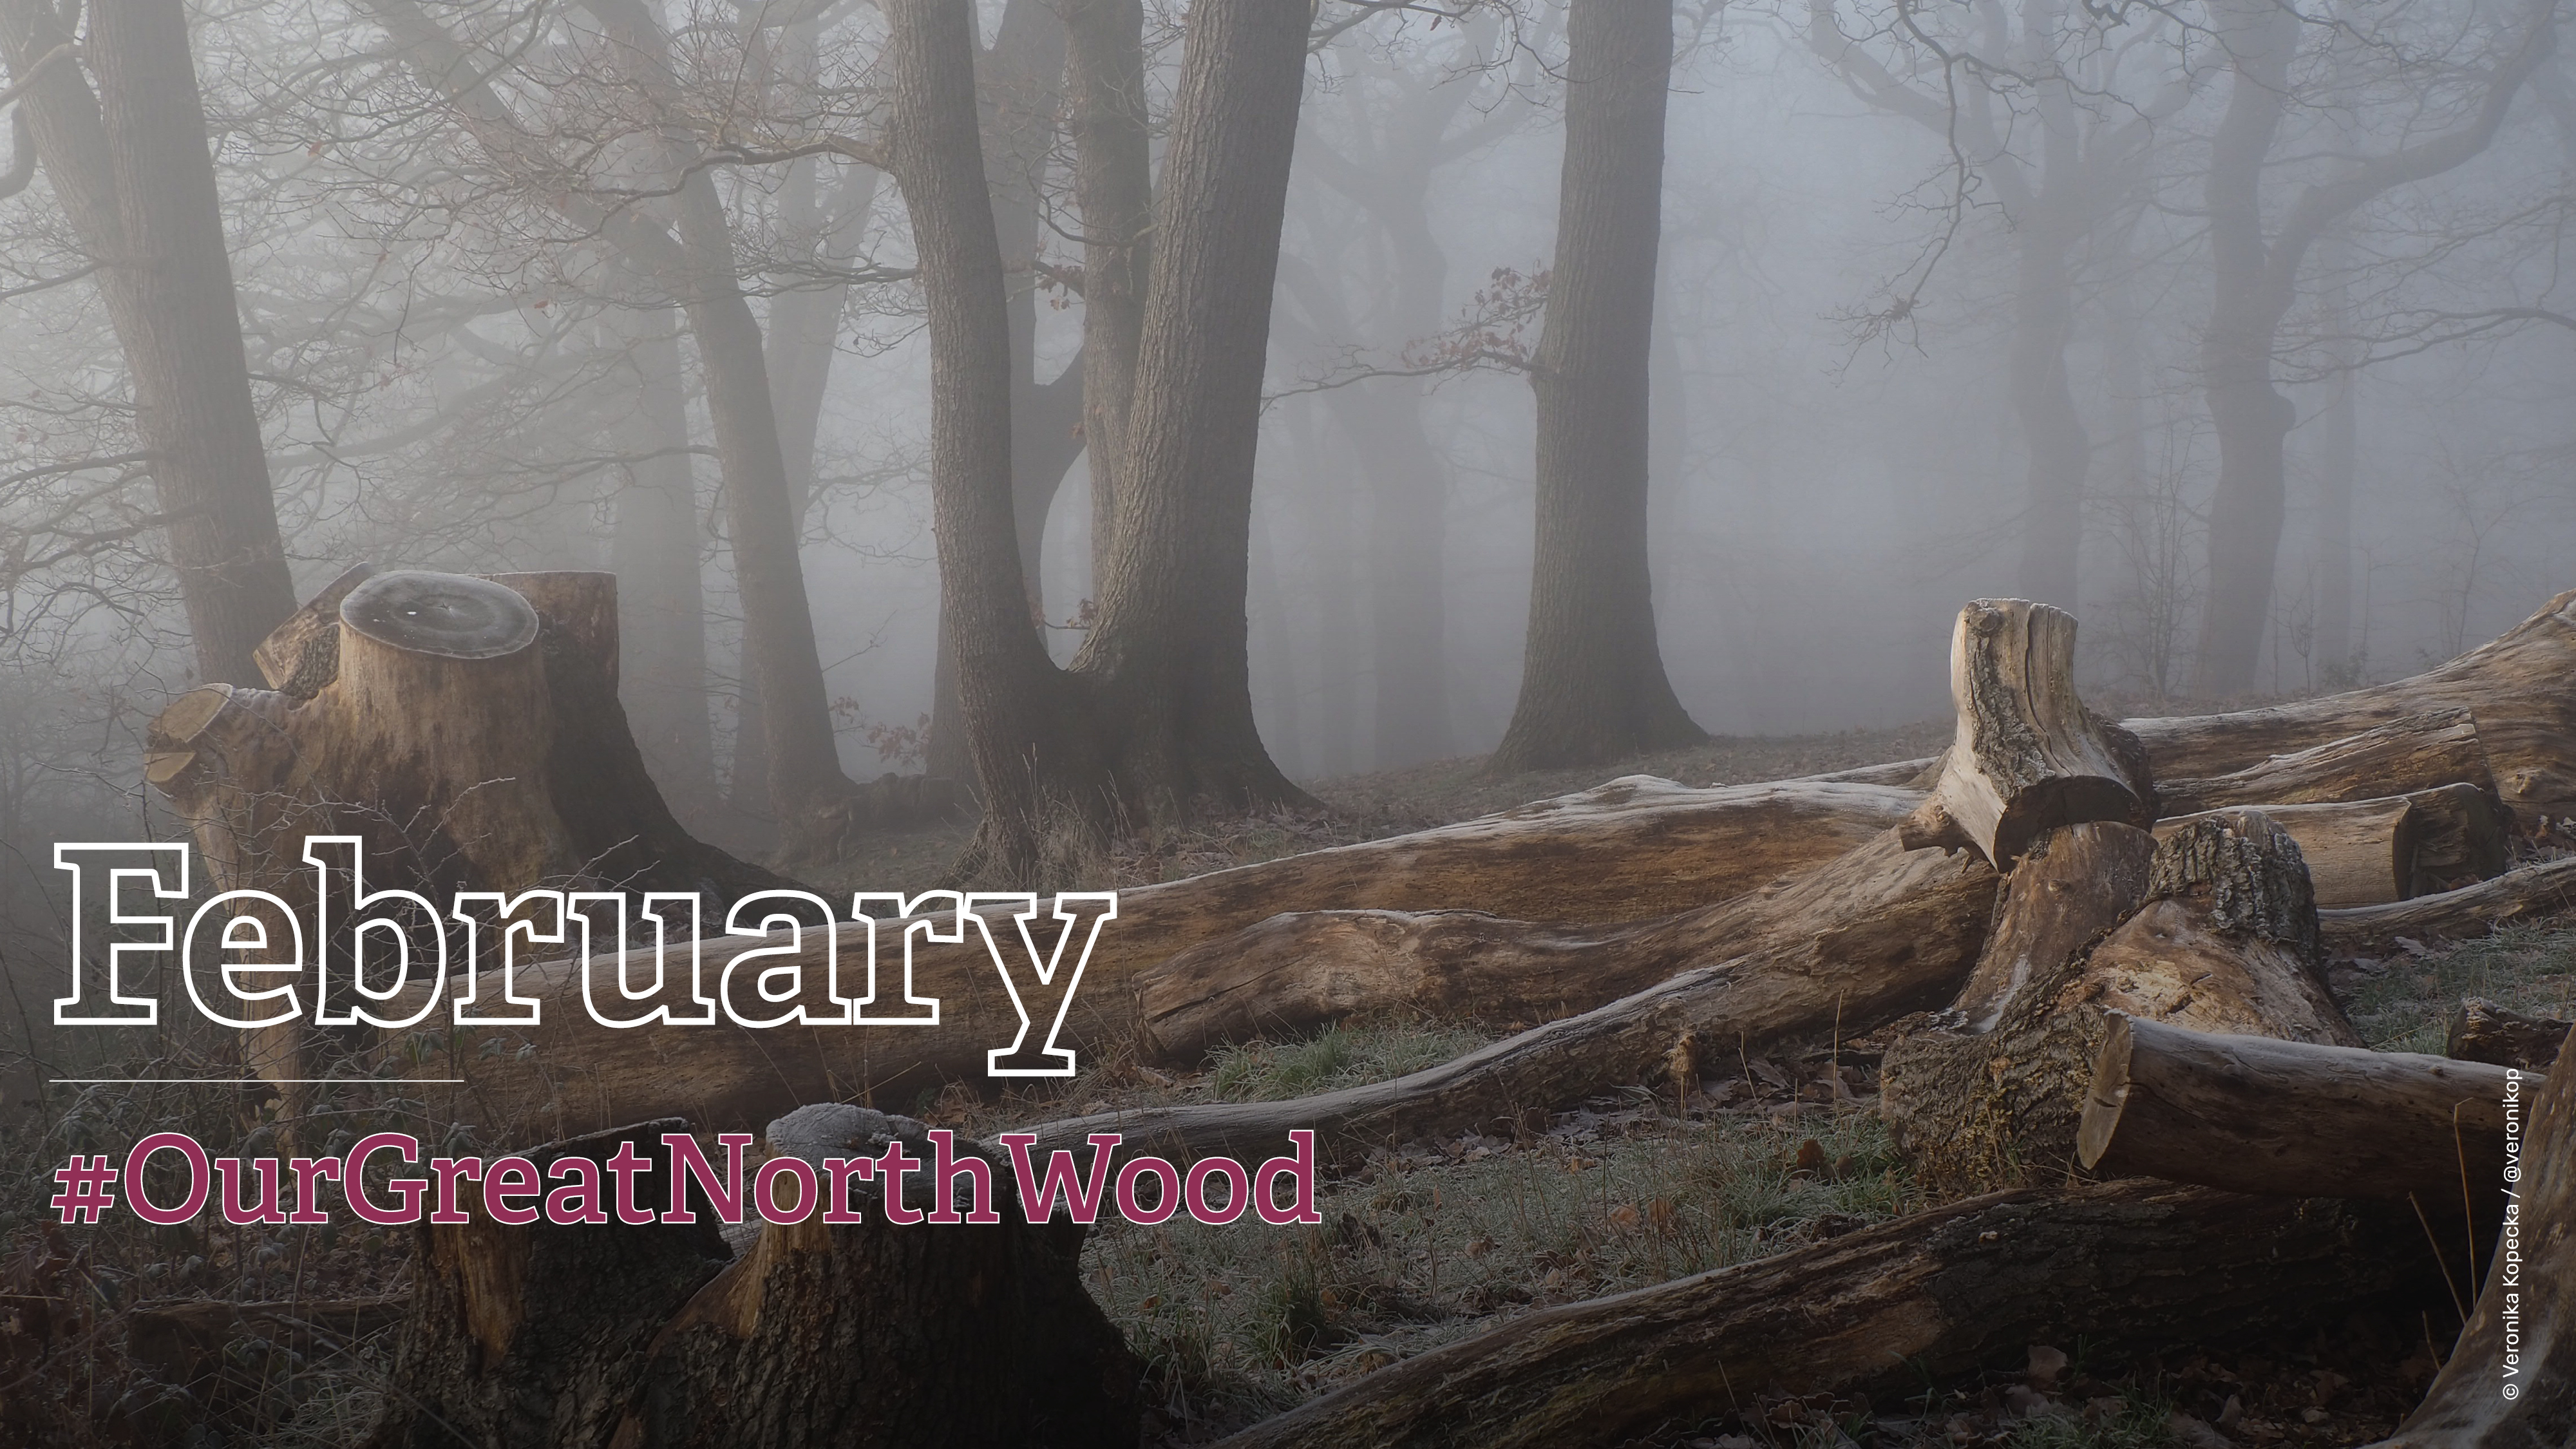 Great North Wood - February